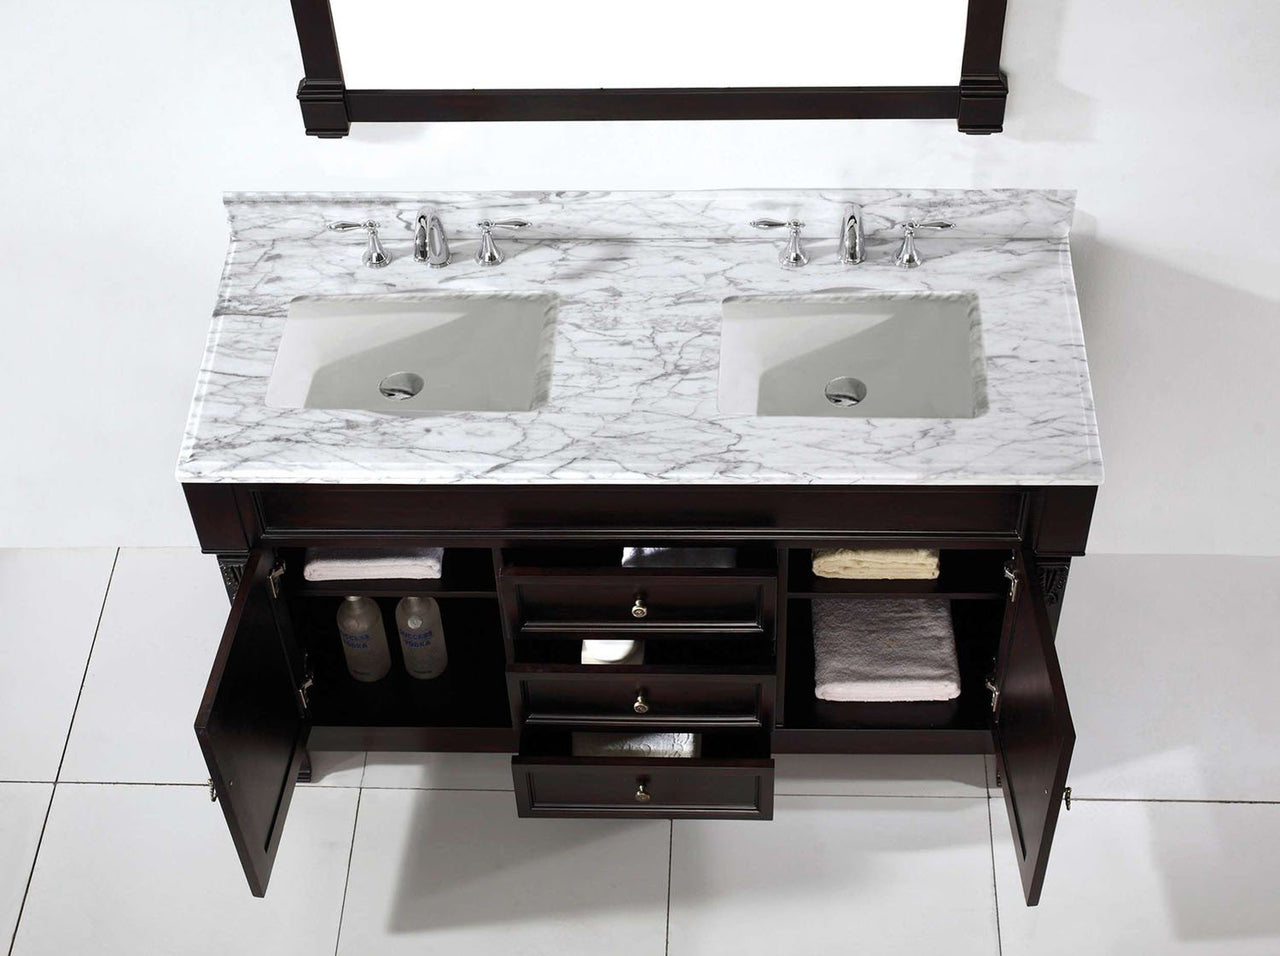 Virtu USA Huntshire 60" Double Square Sink Dark Walnut Top Vanity in Dark Walnut with Mirror Vanity Virtu USA 